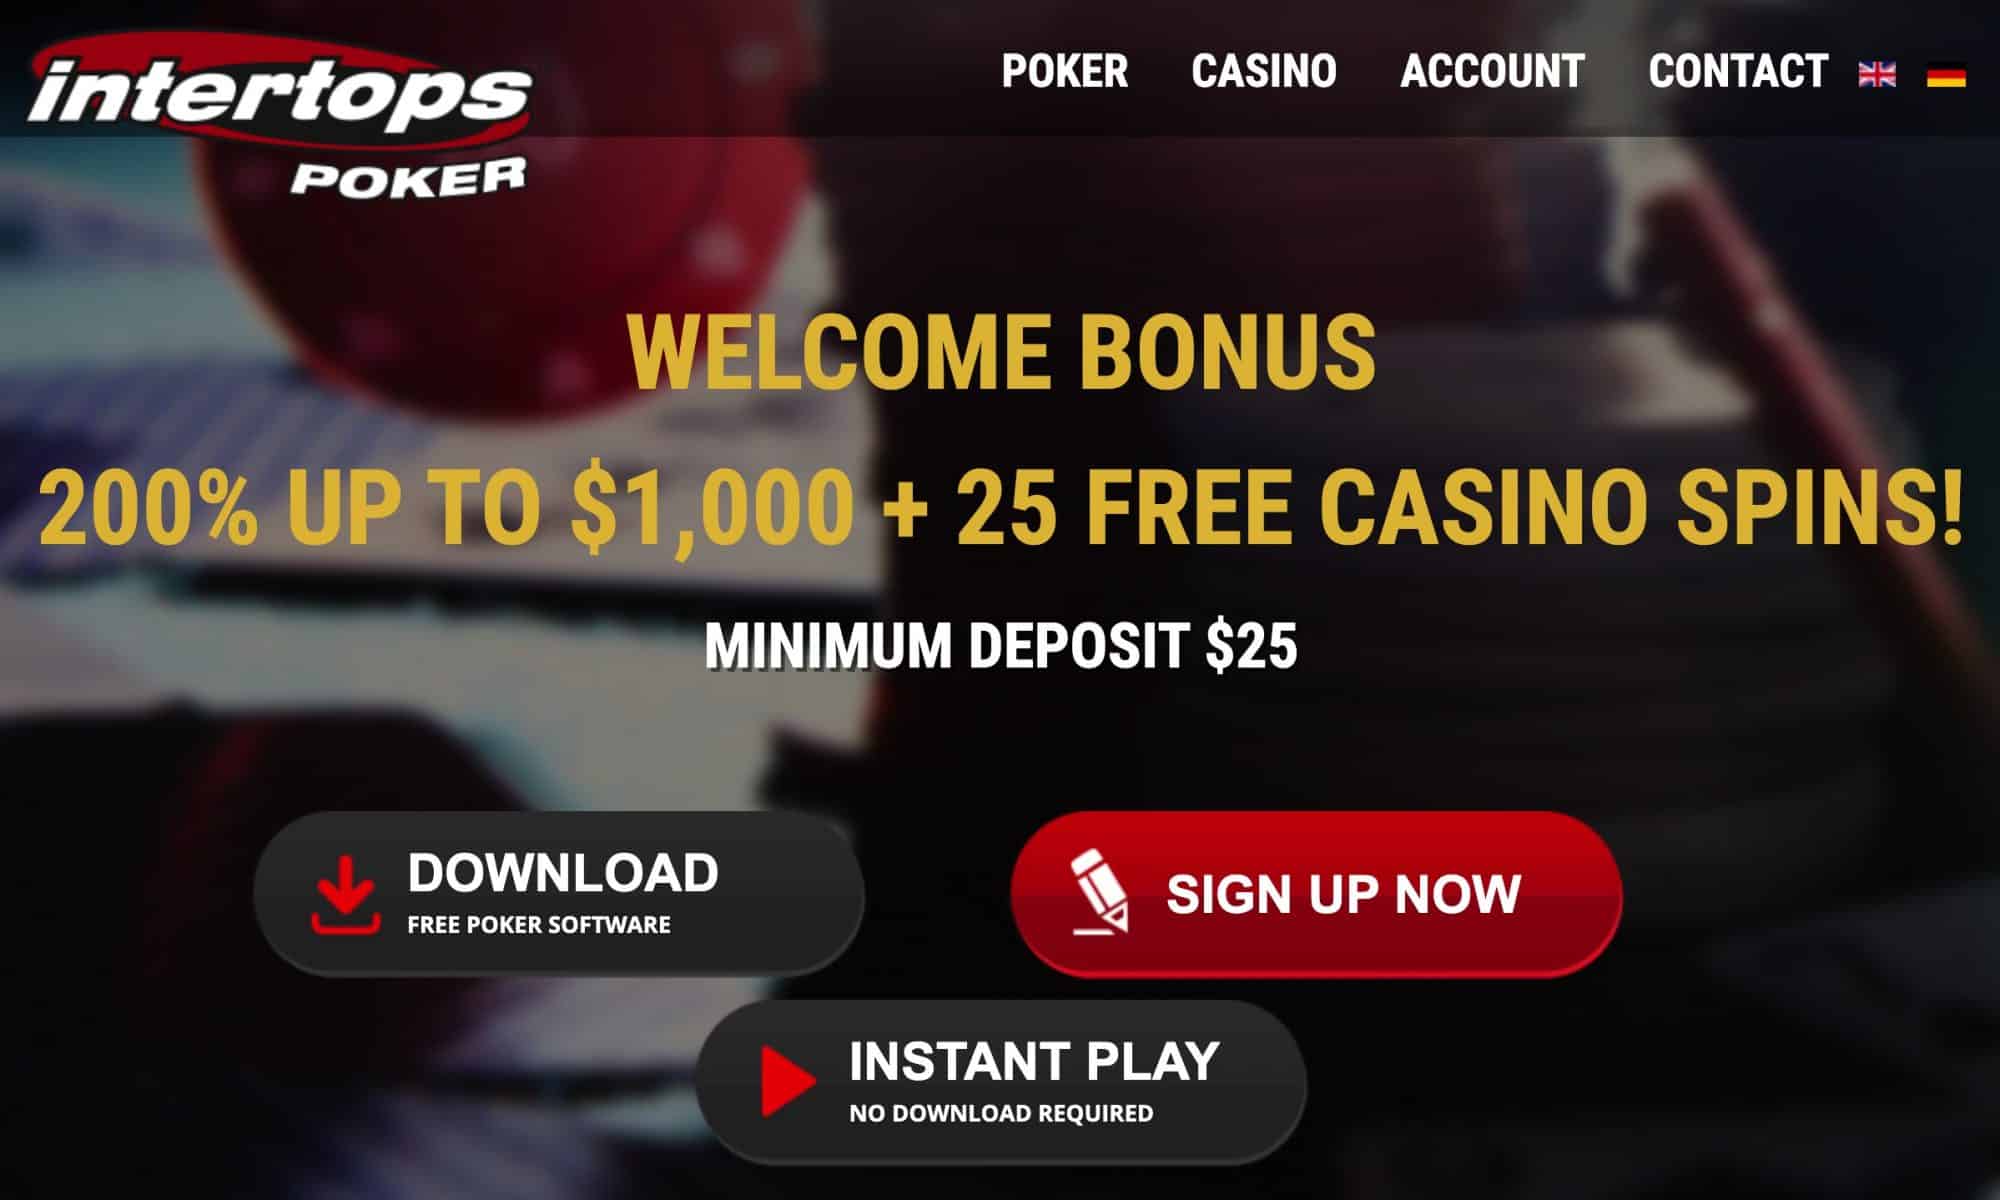 Intertops Poker - claim up to $1000 with 200% match bonus